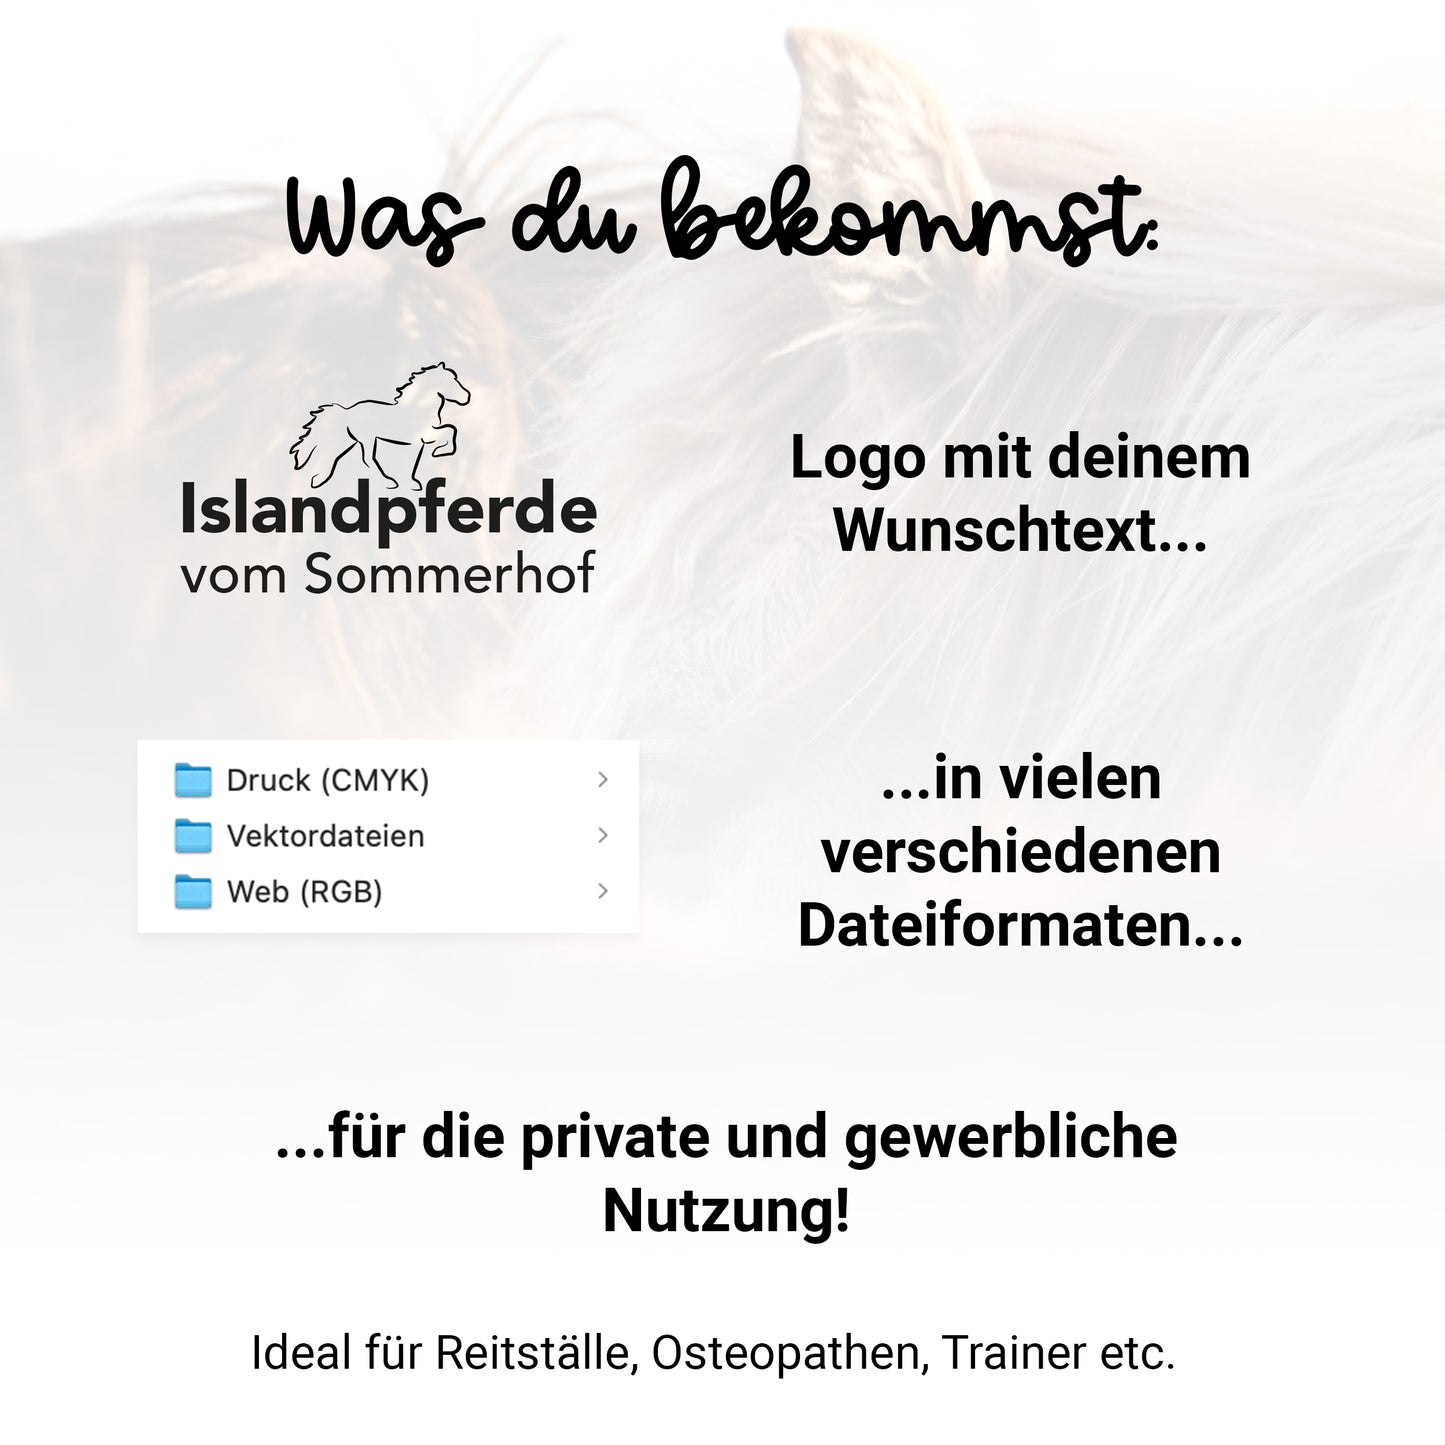 Logo Design "Islandpferd #1" - DIGITALE DATEI - Reitstall, Islandpferde-Hof, Trainer, Osteopathen etc.